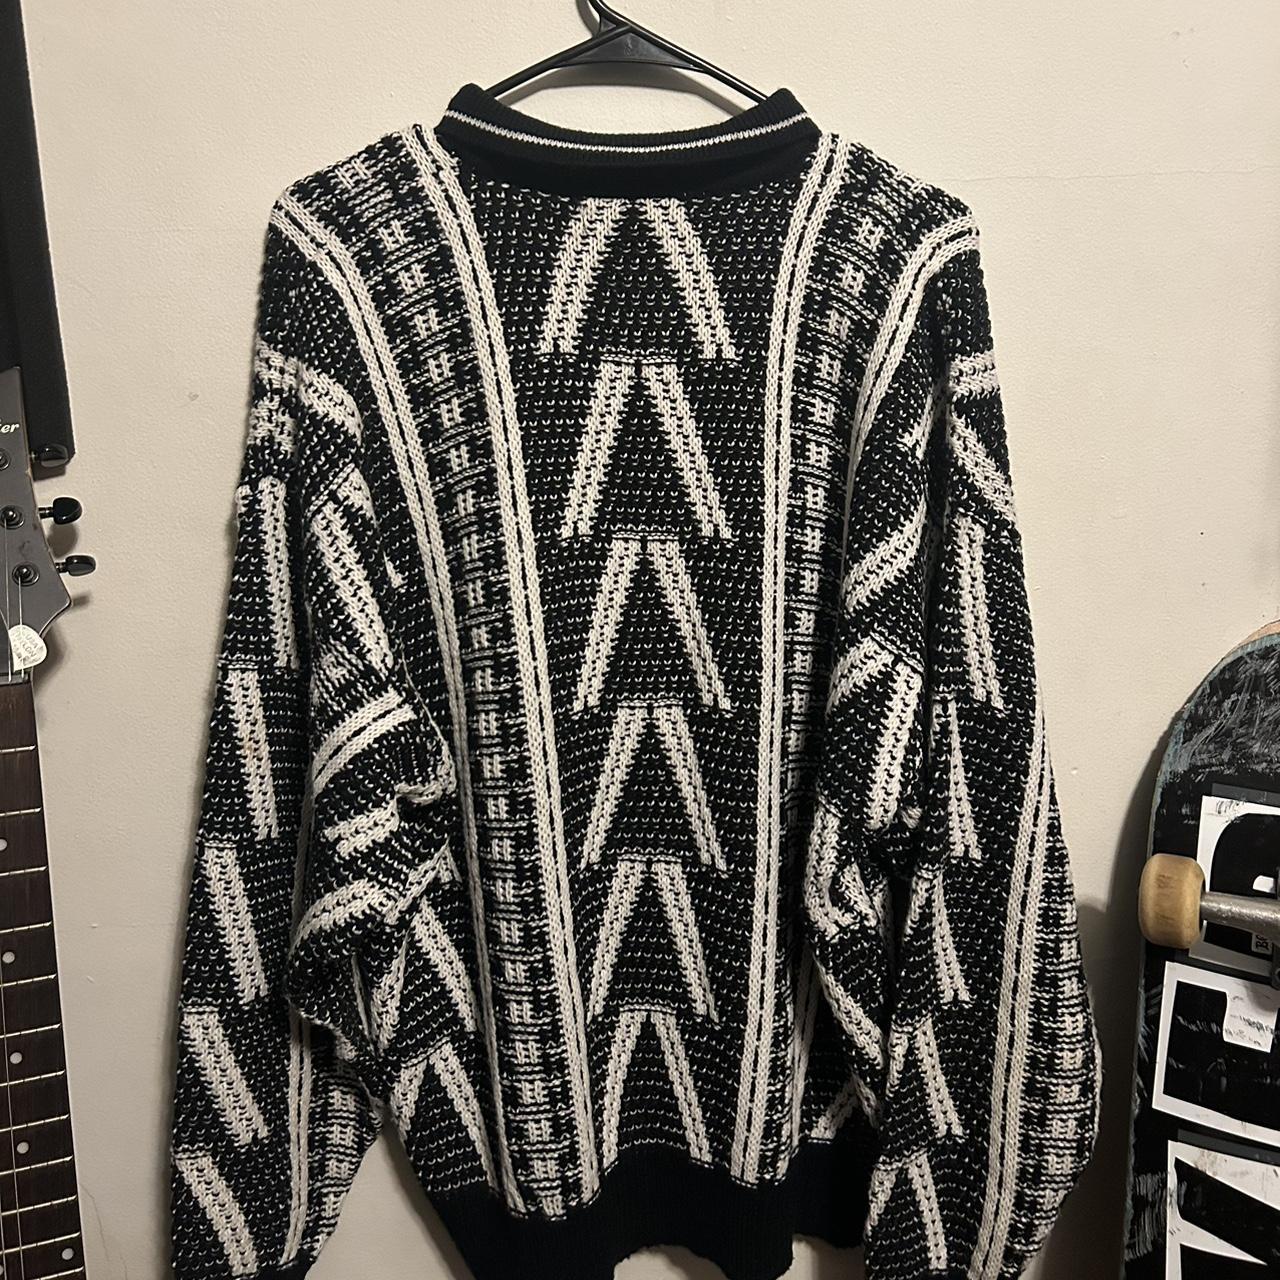 Vintage Forum Sweater No stains or marks just... - Depop